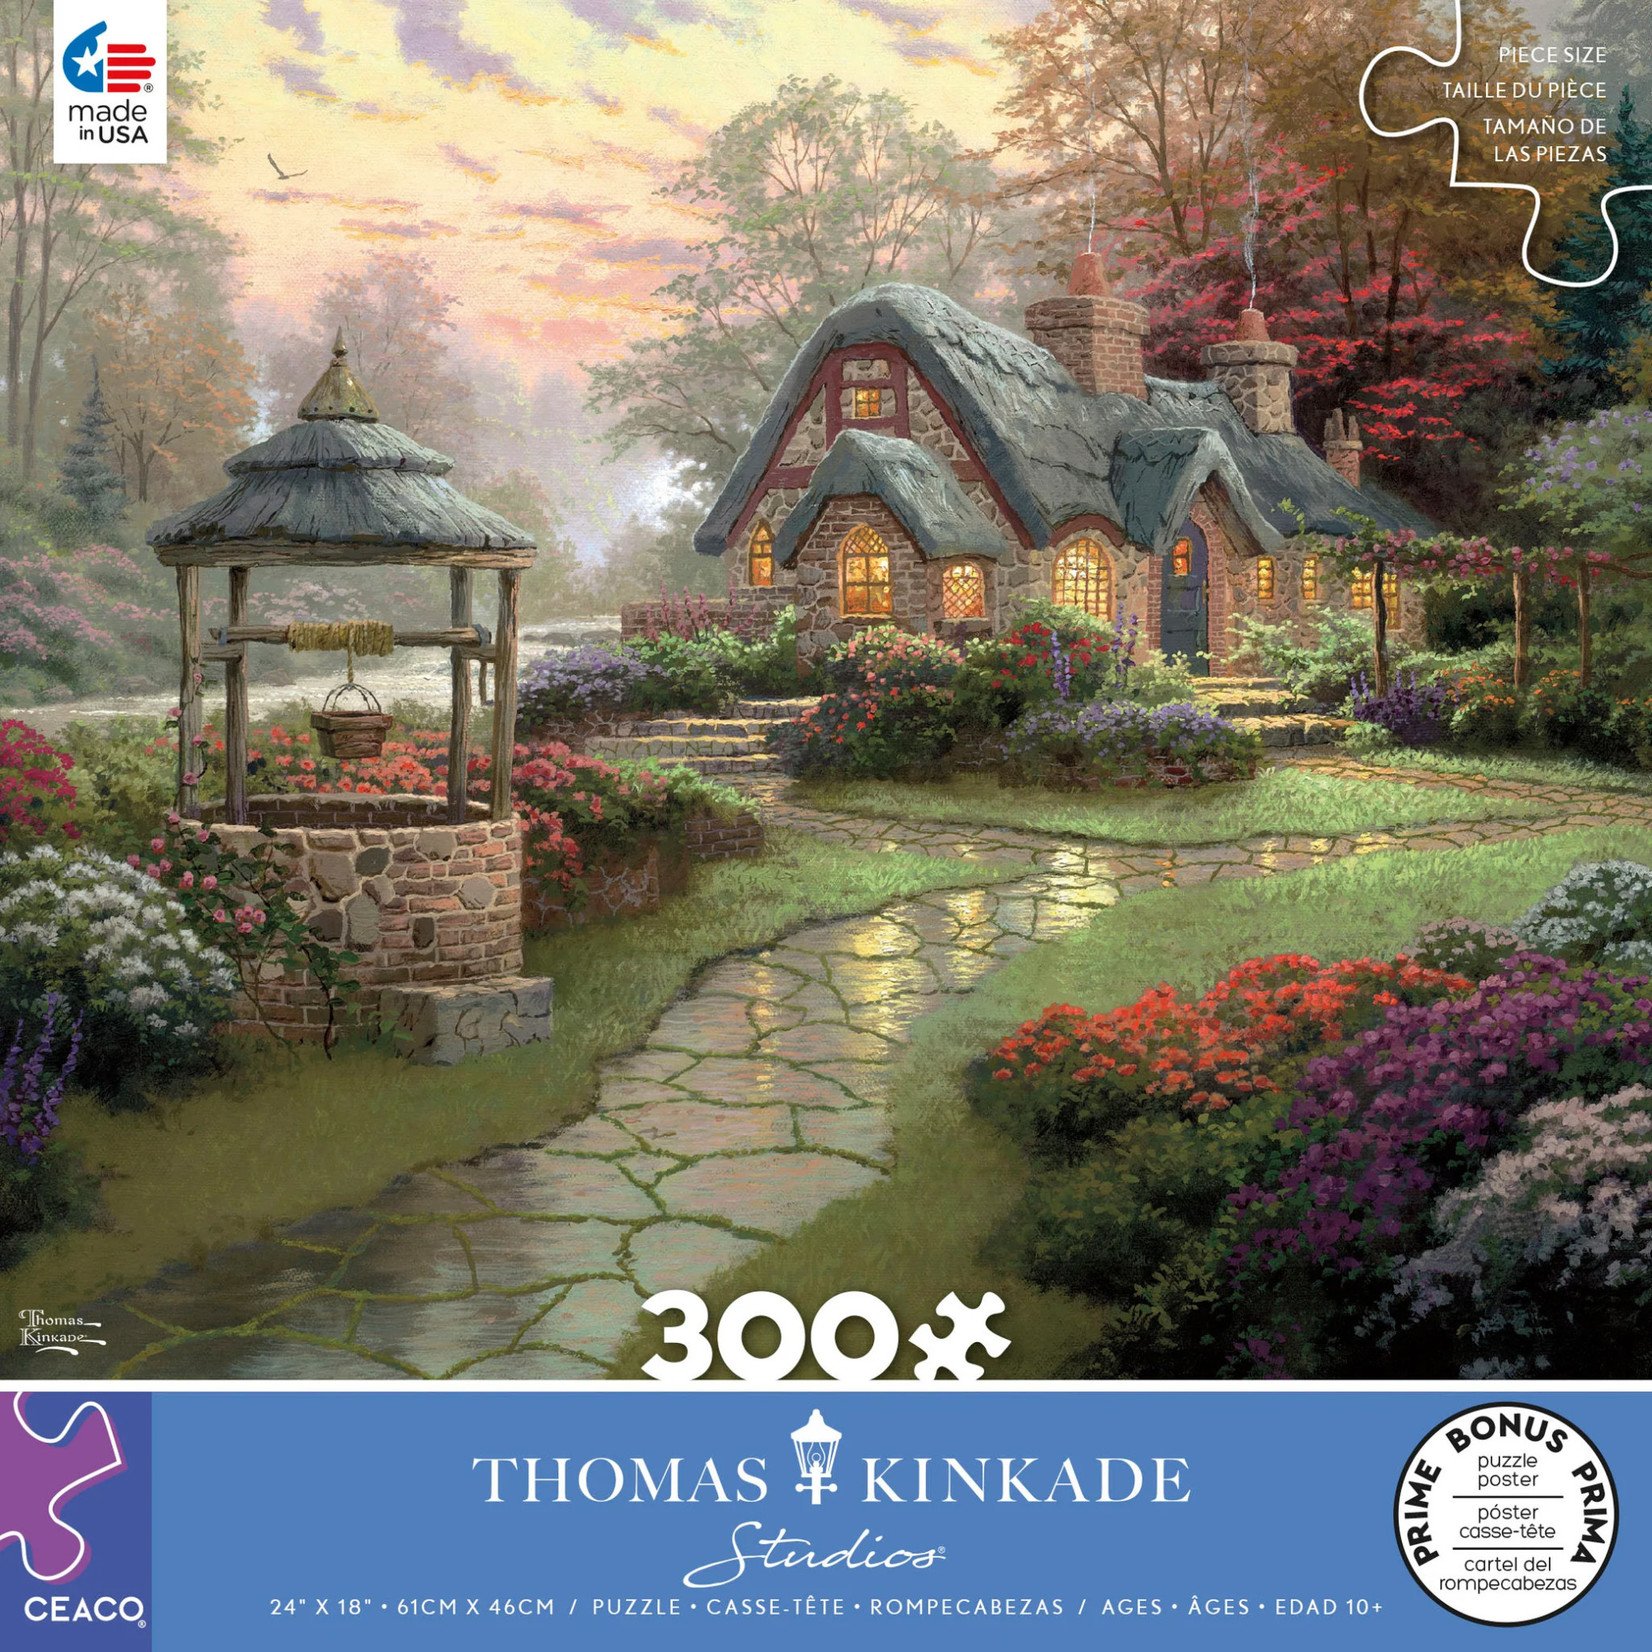 Ceaco Make a Wish Cottage by Thomas Kinkade, 300-Piece Jigsaw Puzzle